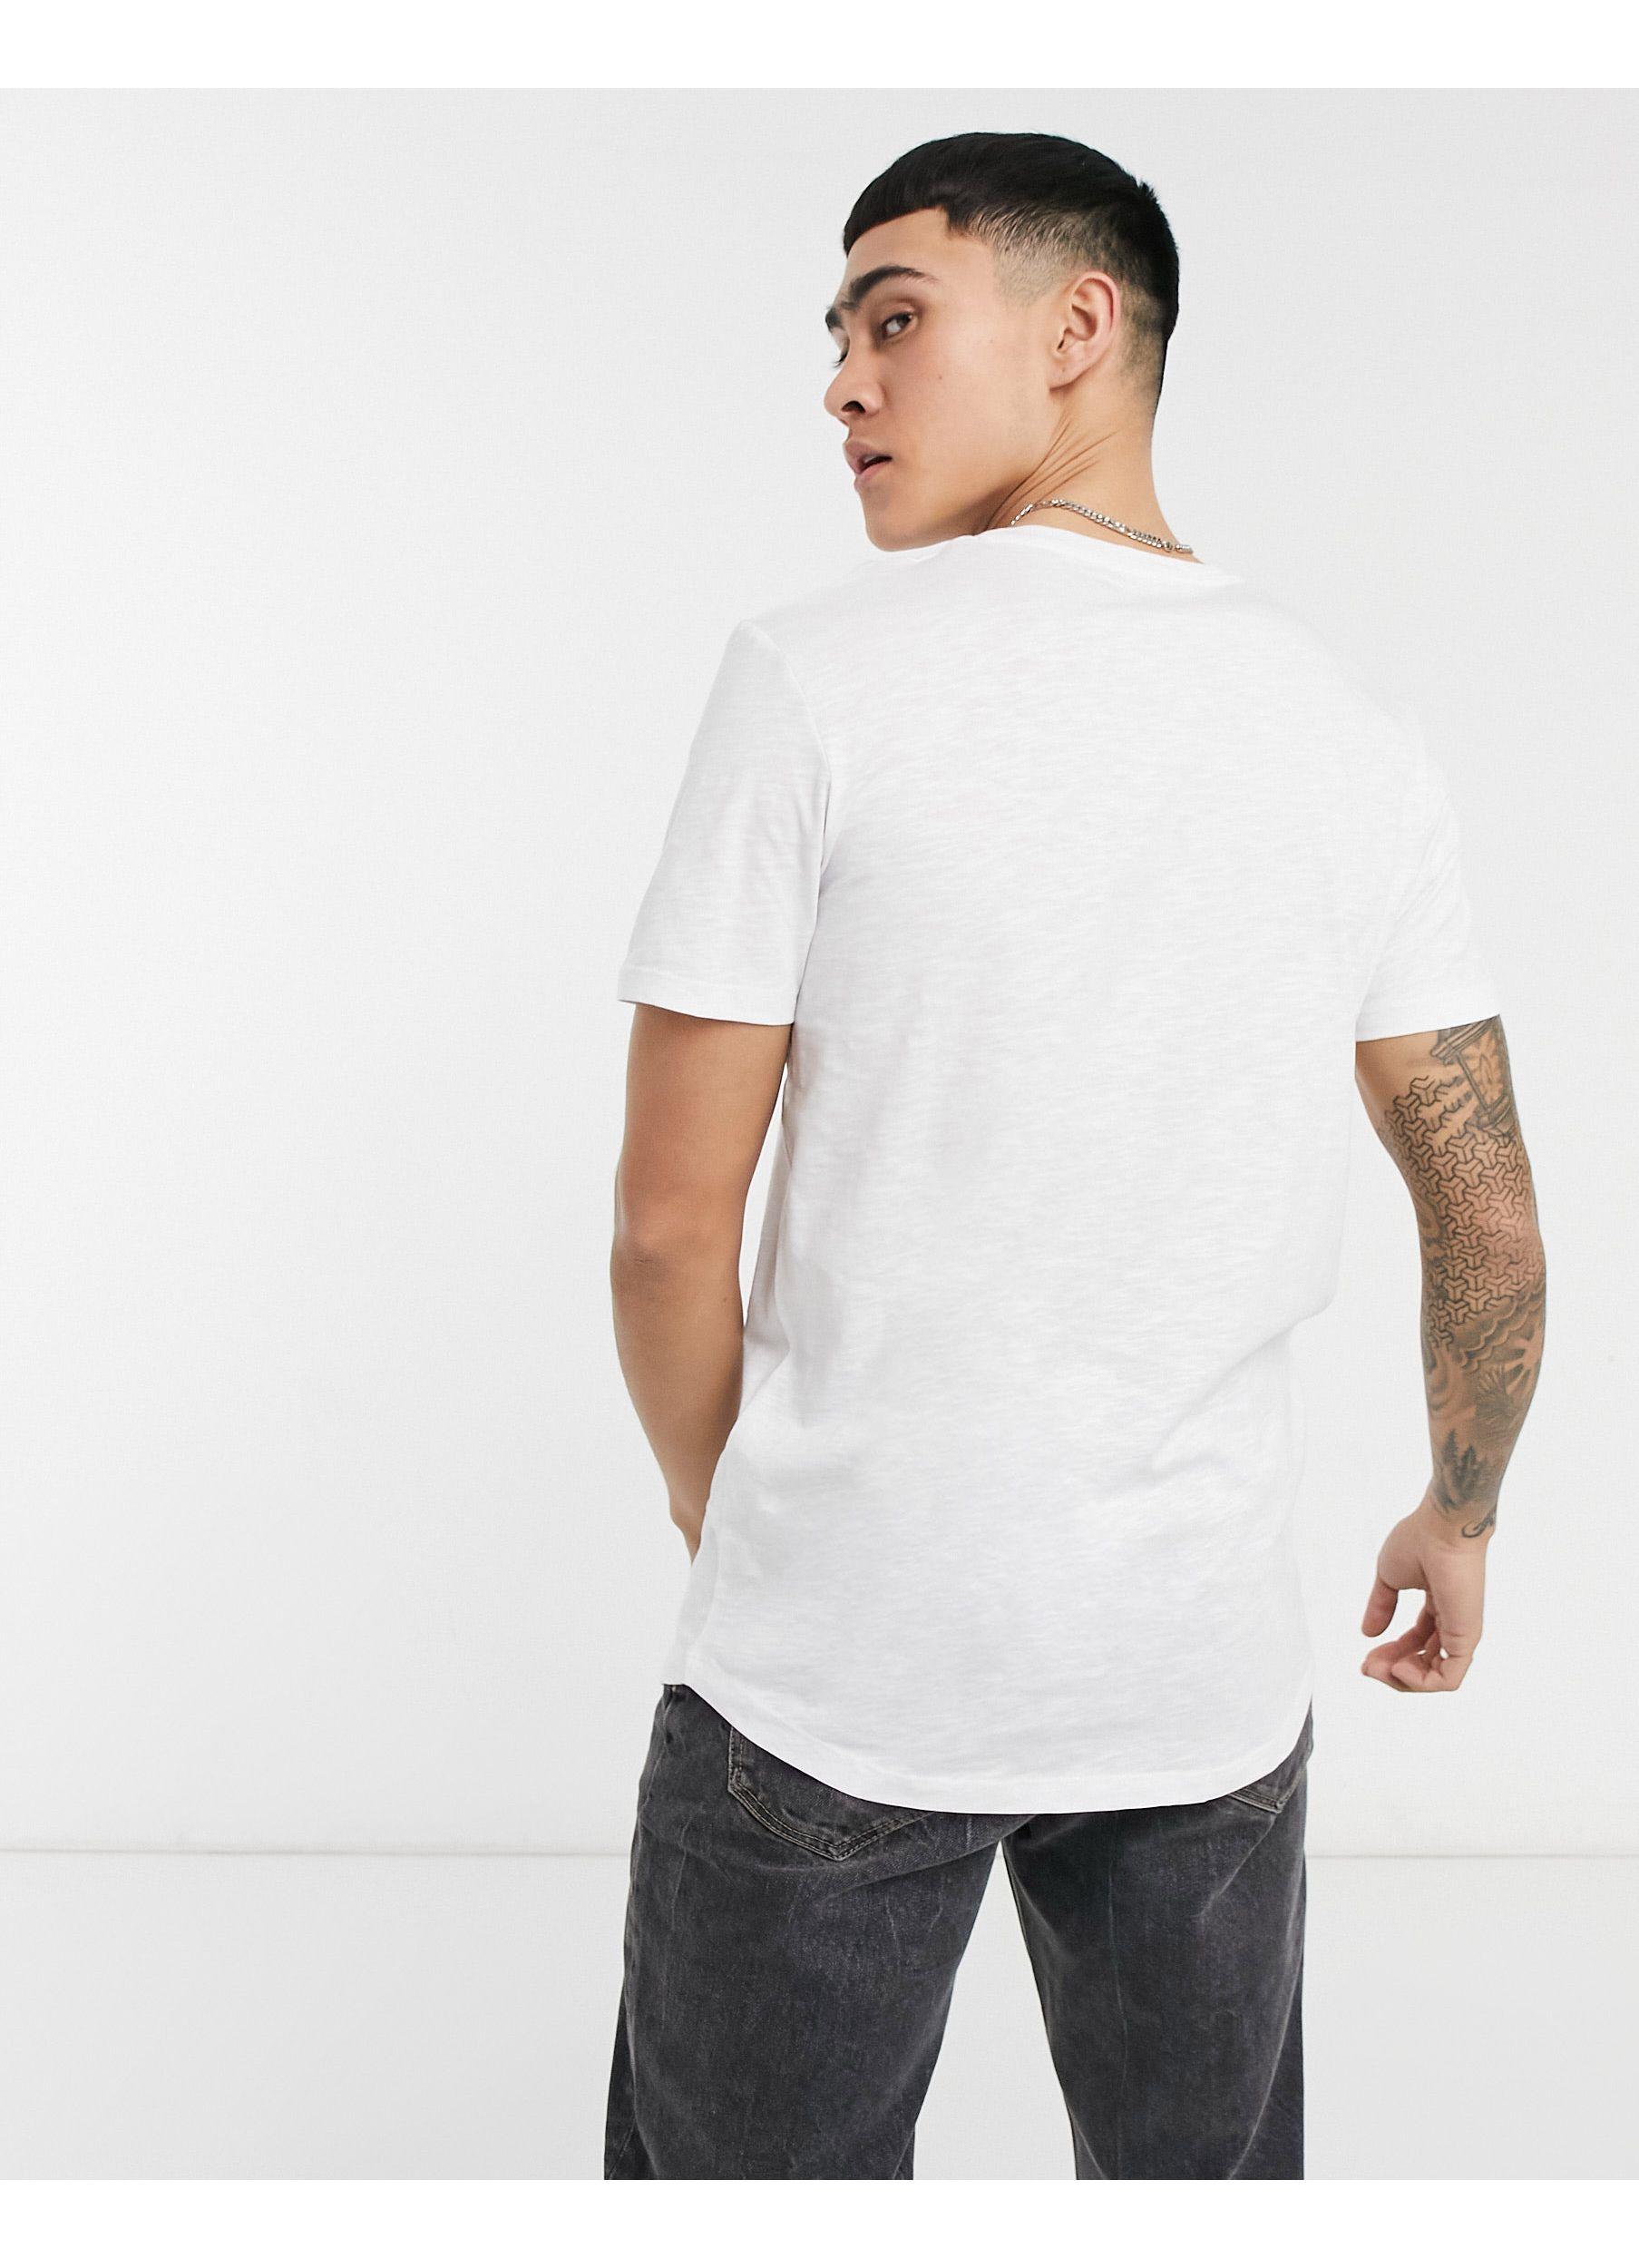 Jack & Jones Originals Longline Curved Hem T-shirt in White for Men